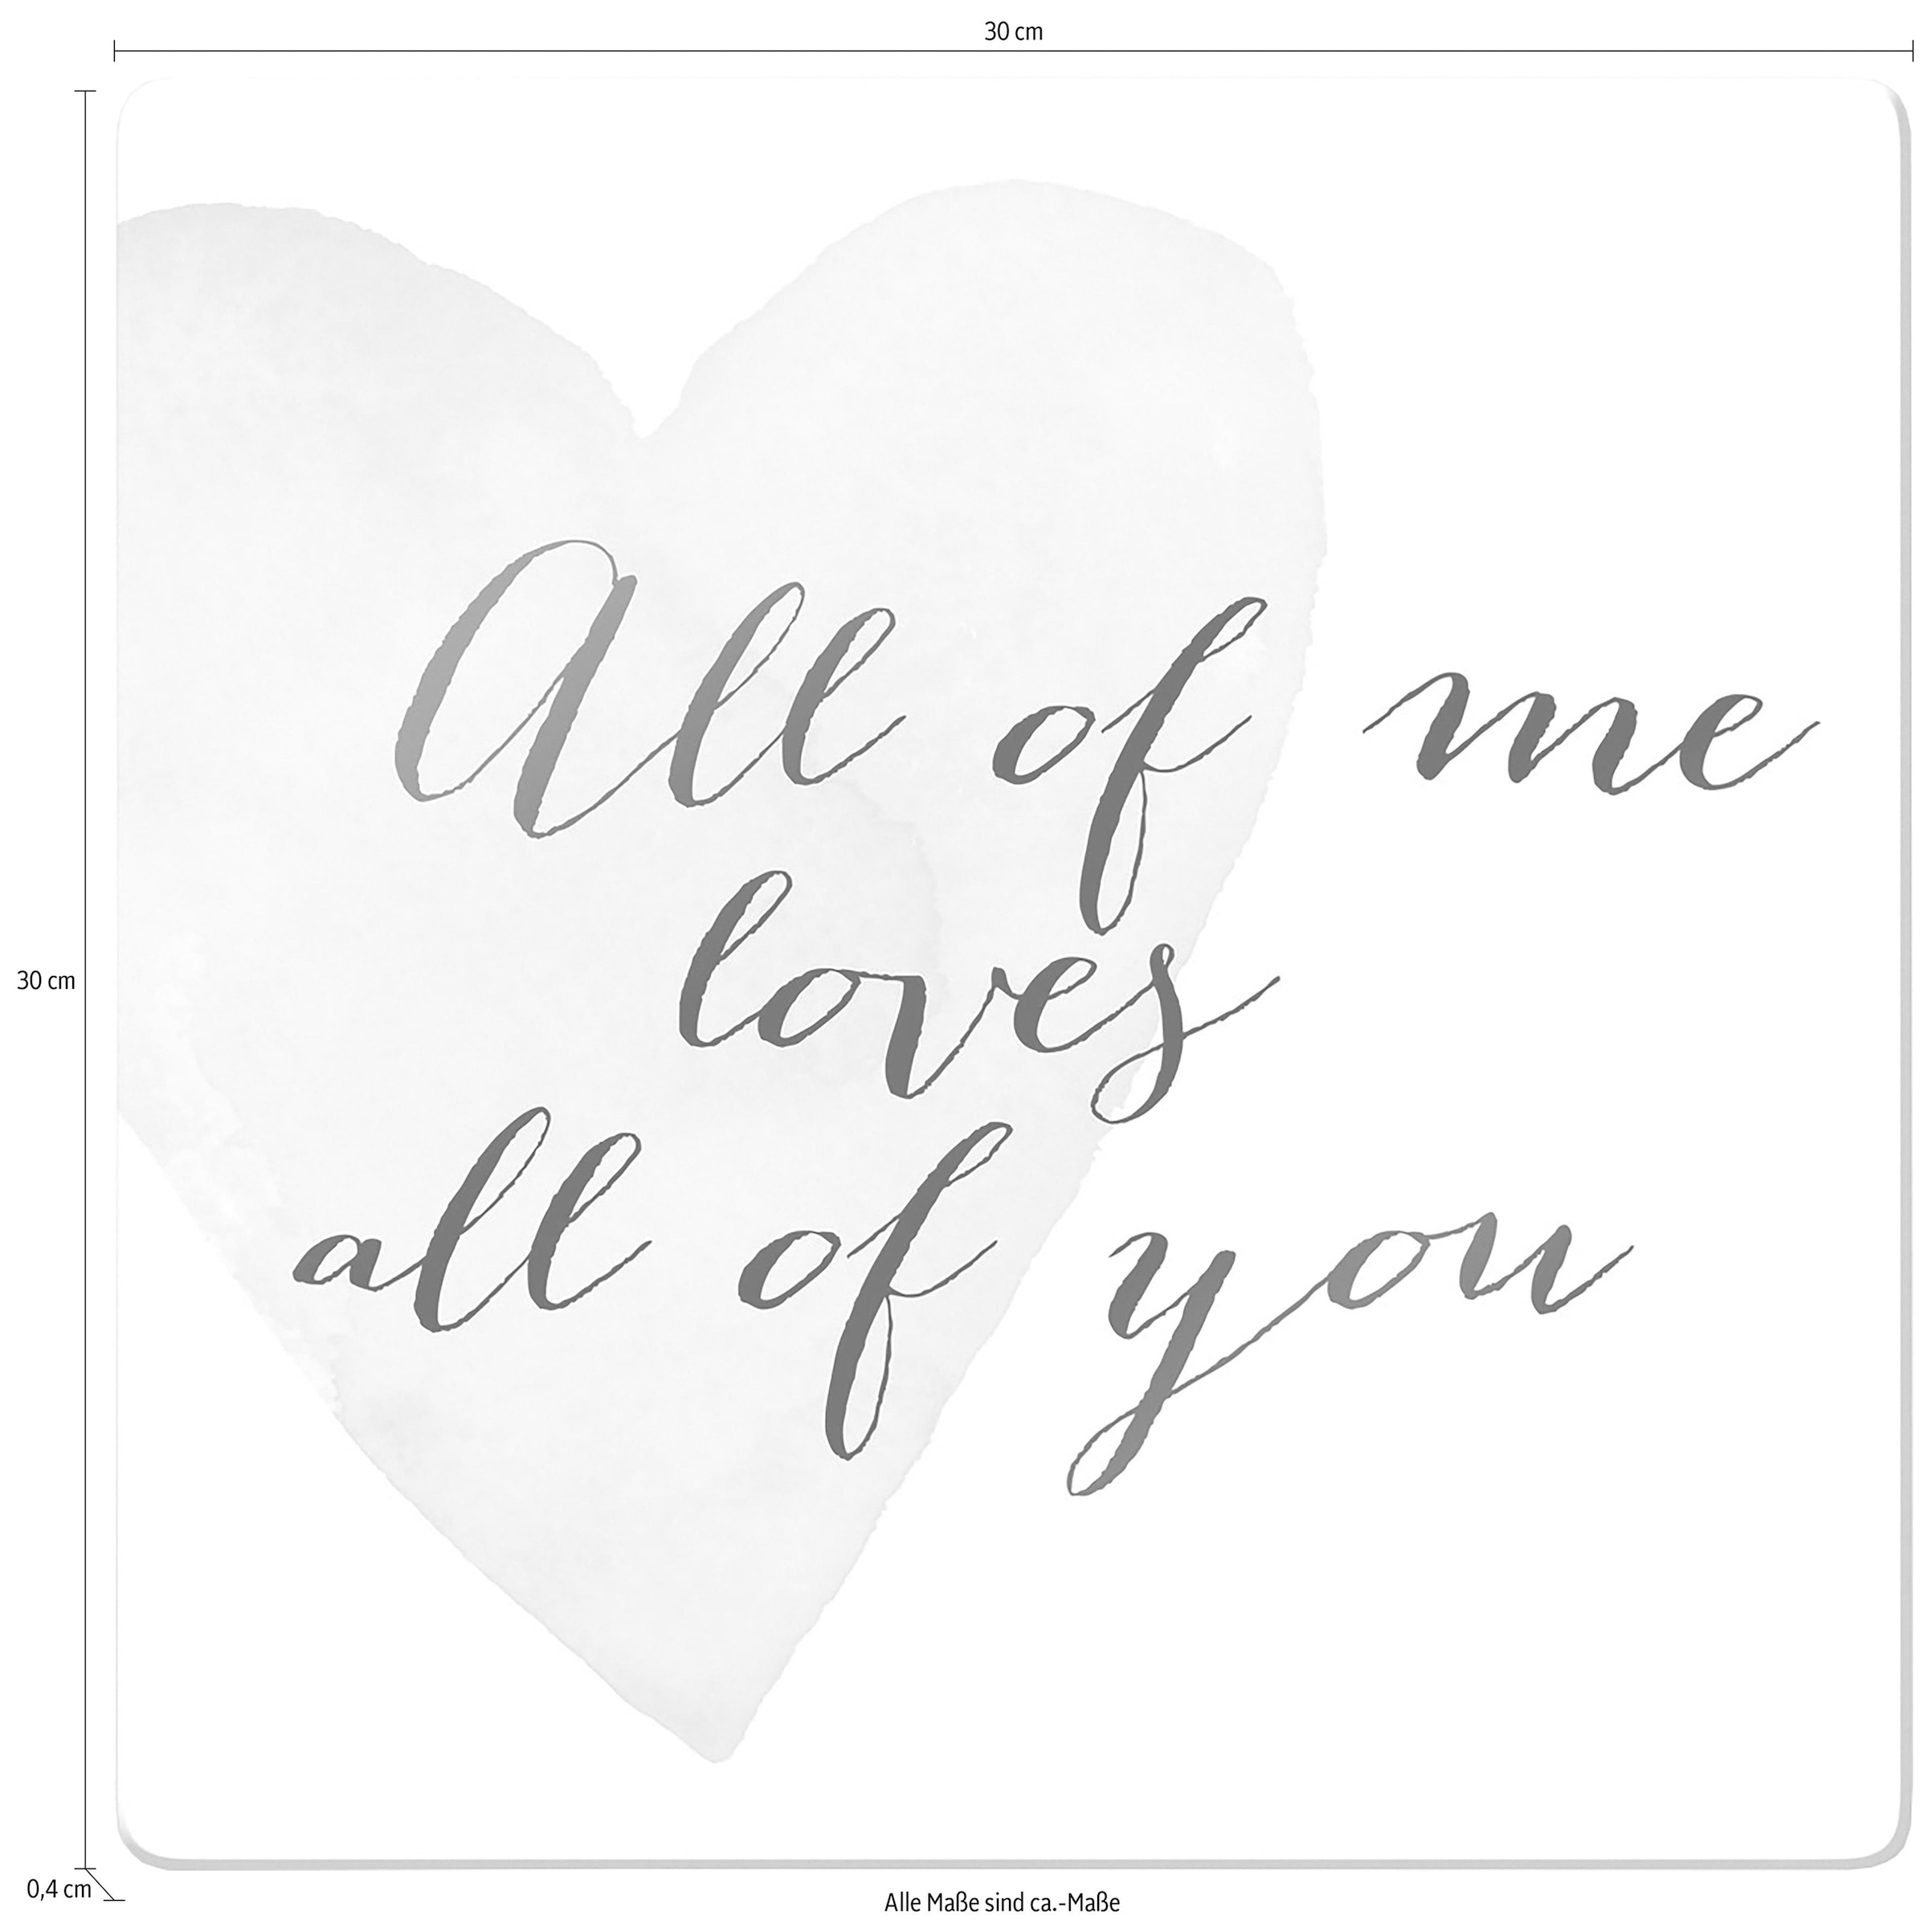 Wall-Art Glasbild »Confetti & Cream of all - cm kaufen of loves All 30/0,4/30 jetzt me you«